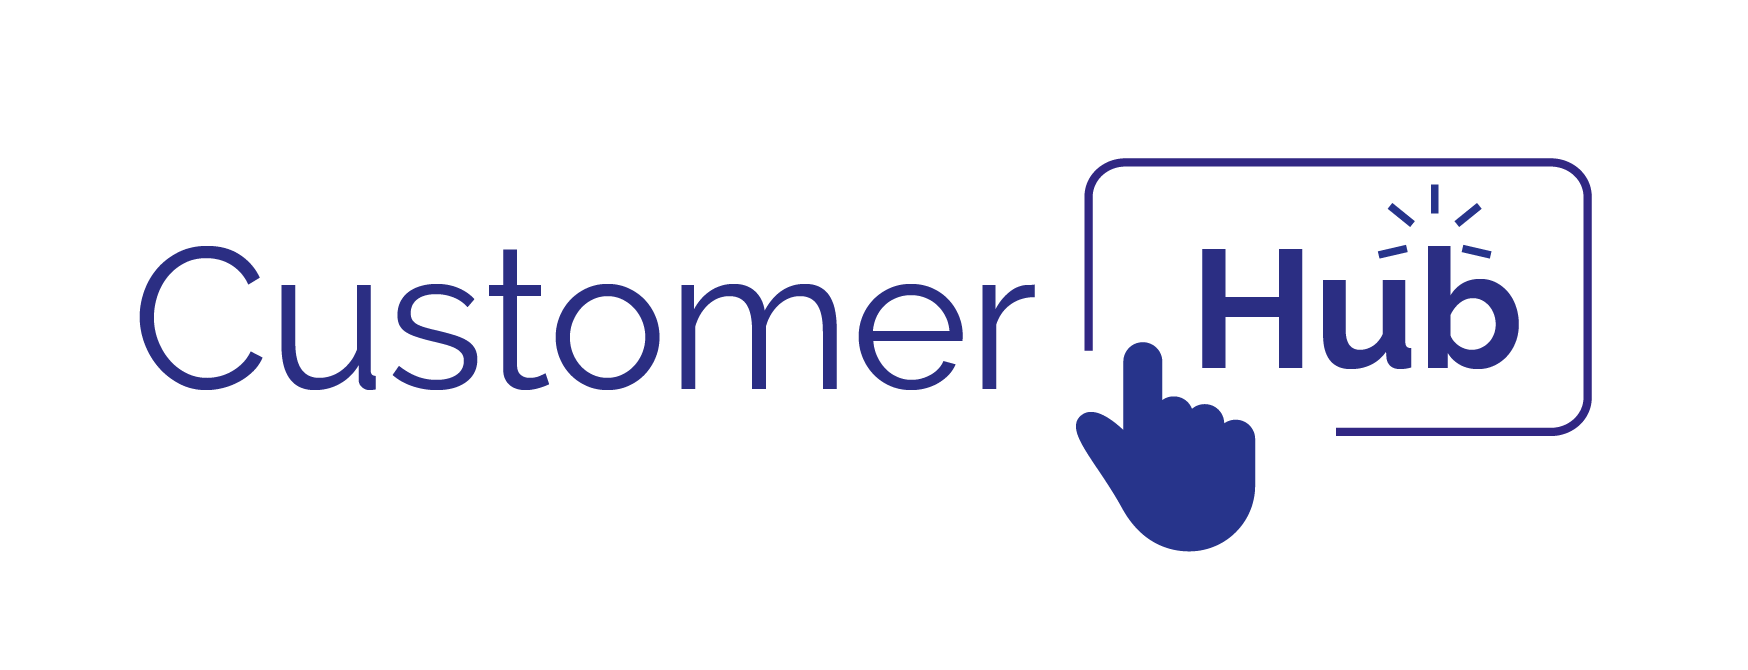 CustomerHub logo v3_CustomerHub-Logo-Blue